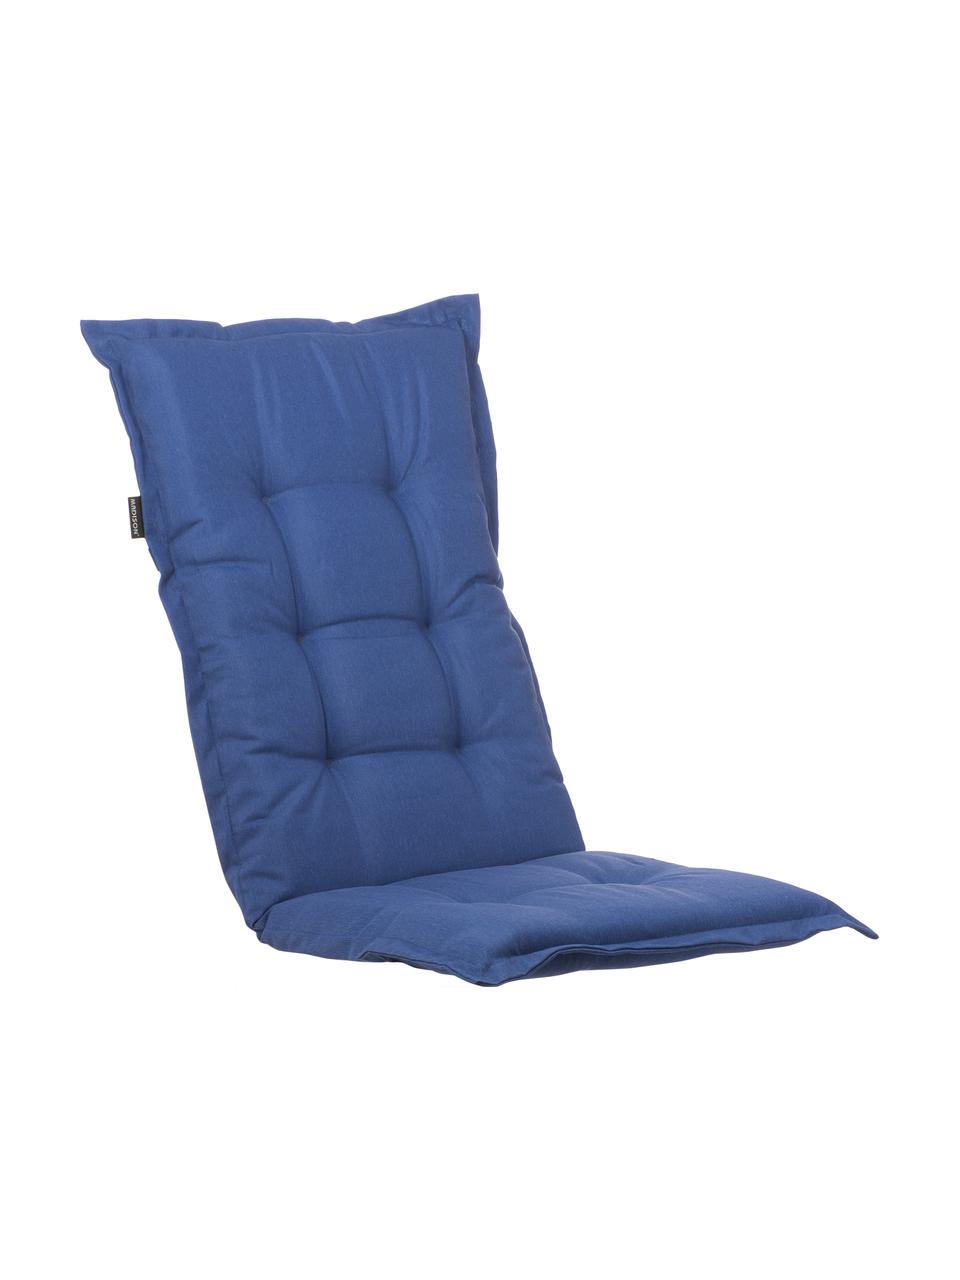 Cojín para silla con respaldo Panama, Funda: 50% algodón, 50% poliéste, Azul marino, An 50 x L 123 cm